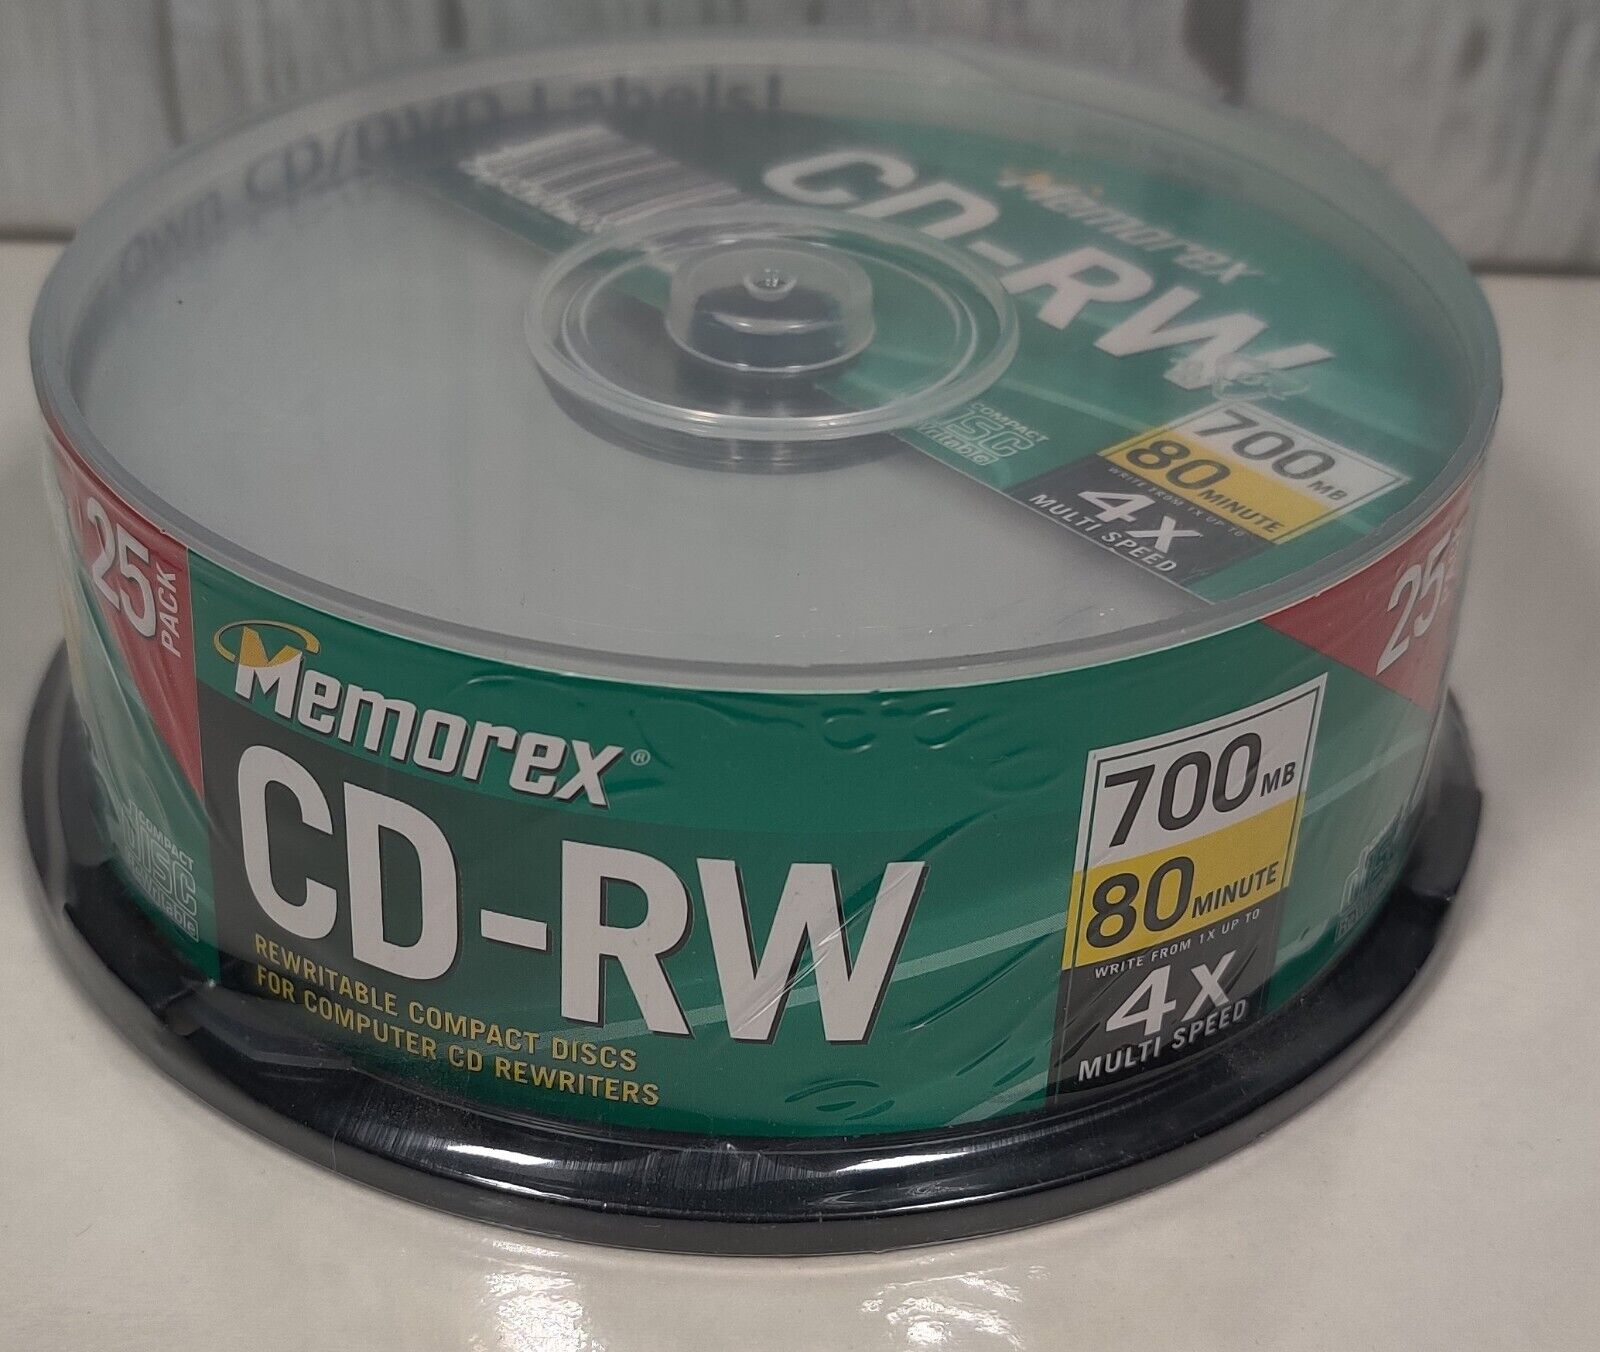 Memorex Cool Colors CD-R 40X700MB 80min (25 Pack) New Sealed